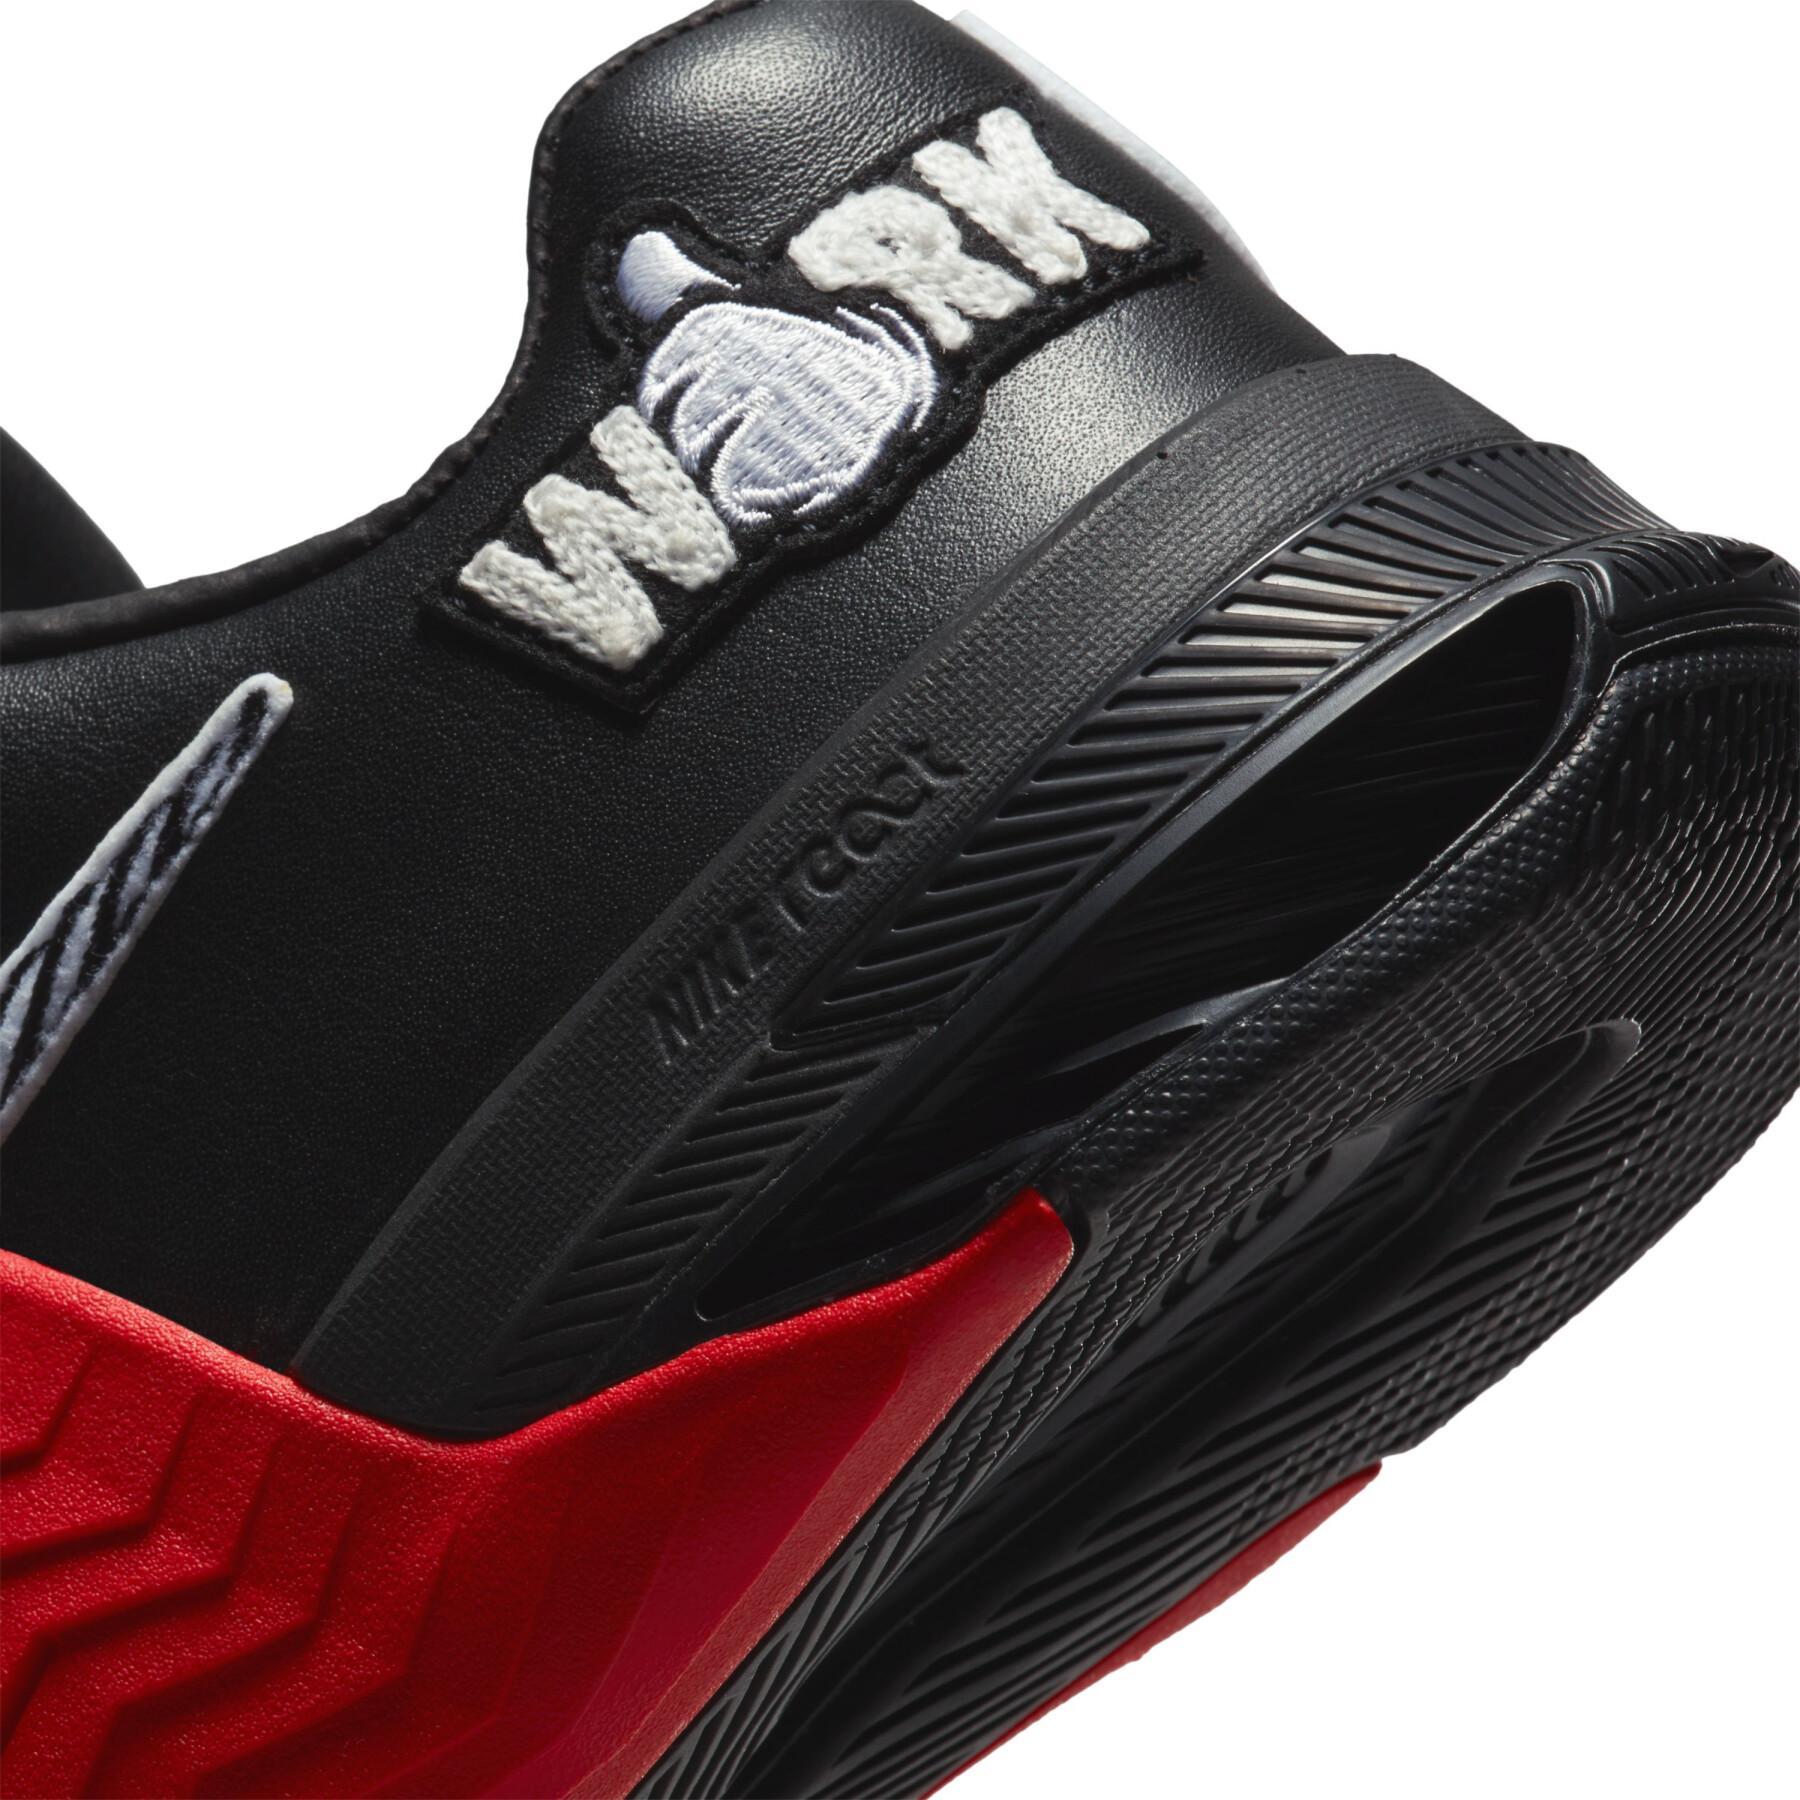 Hallenschuhe Nike Metcon 8 MF